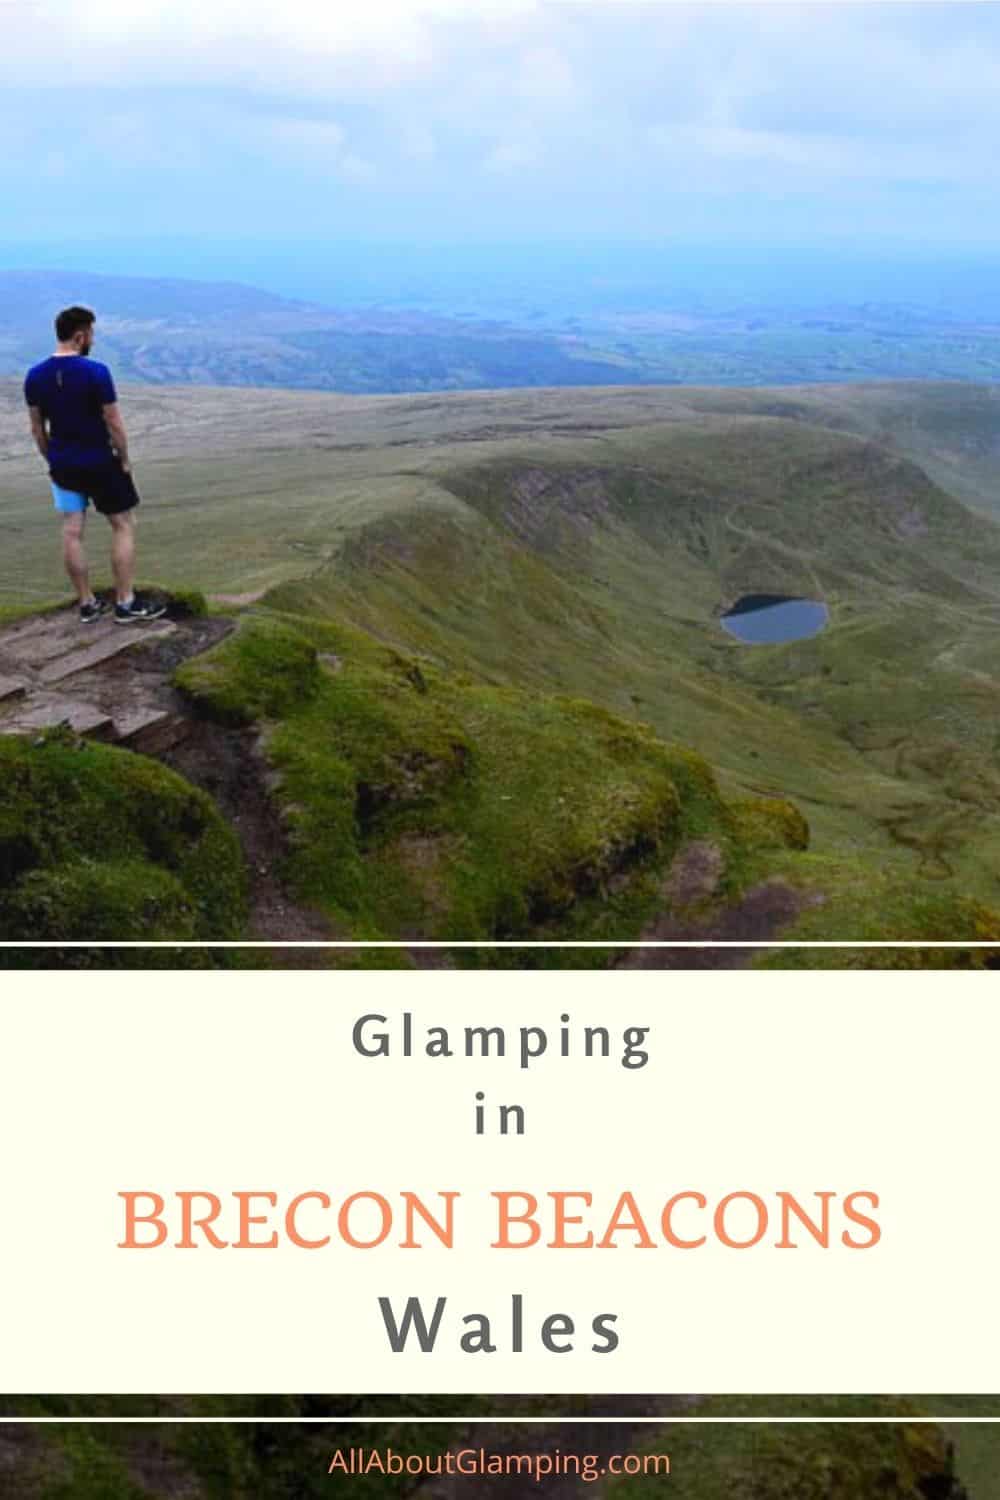 Brecon Beacons Wales